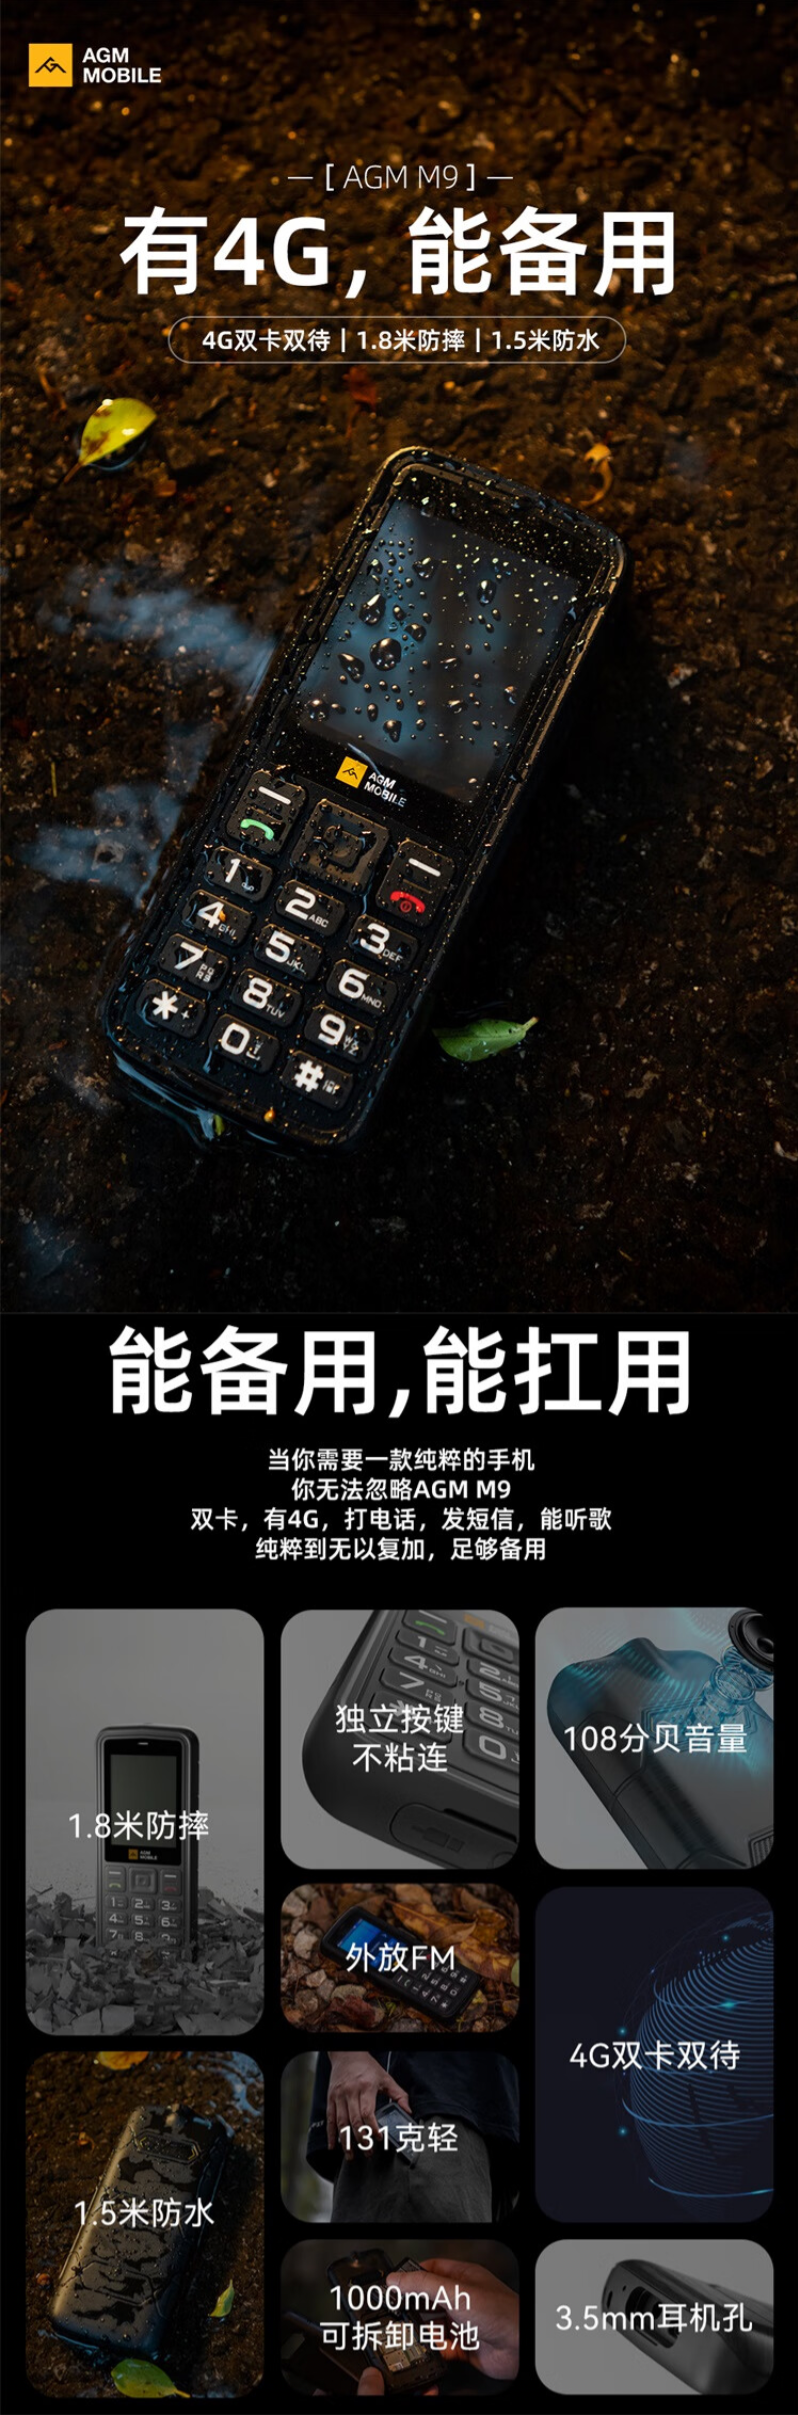 AGM 推出三防功能手机 M9：4G 全网通、1.8 米防摔 / 1.5 米防水，199 元